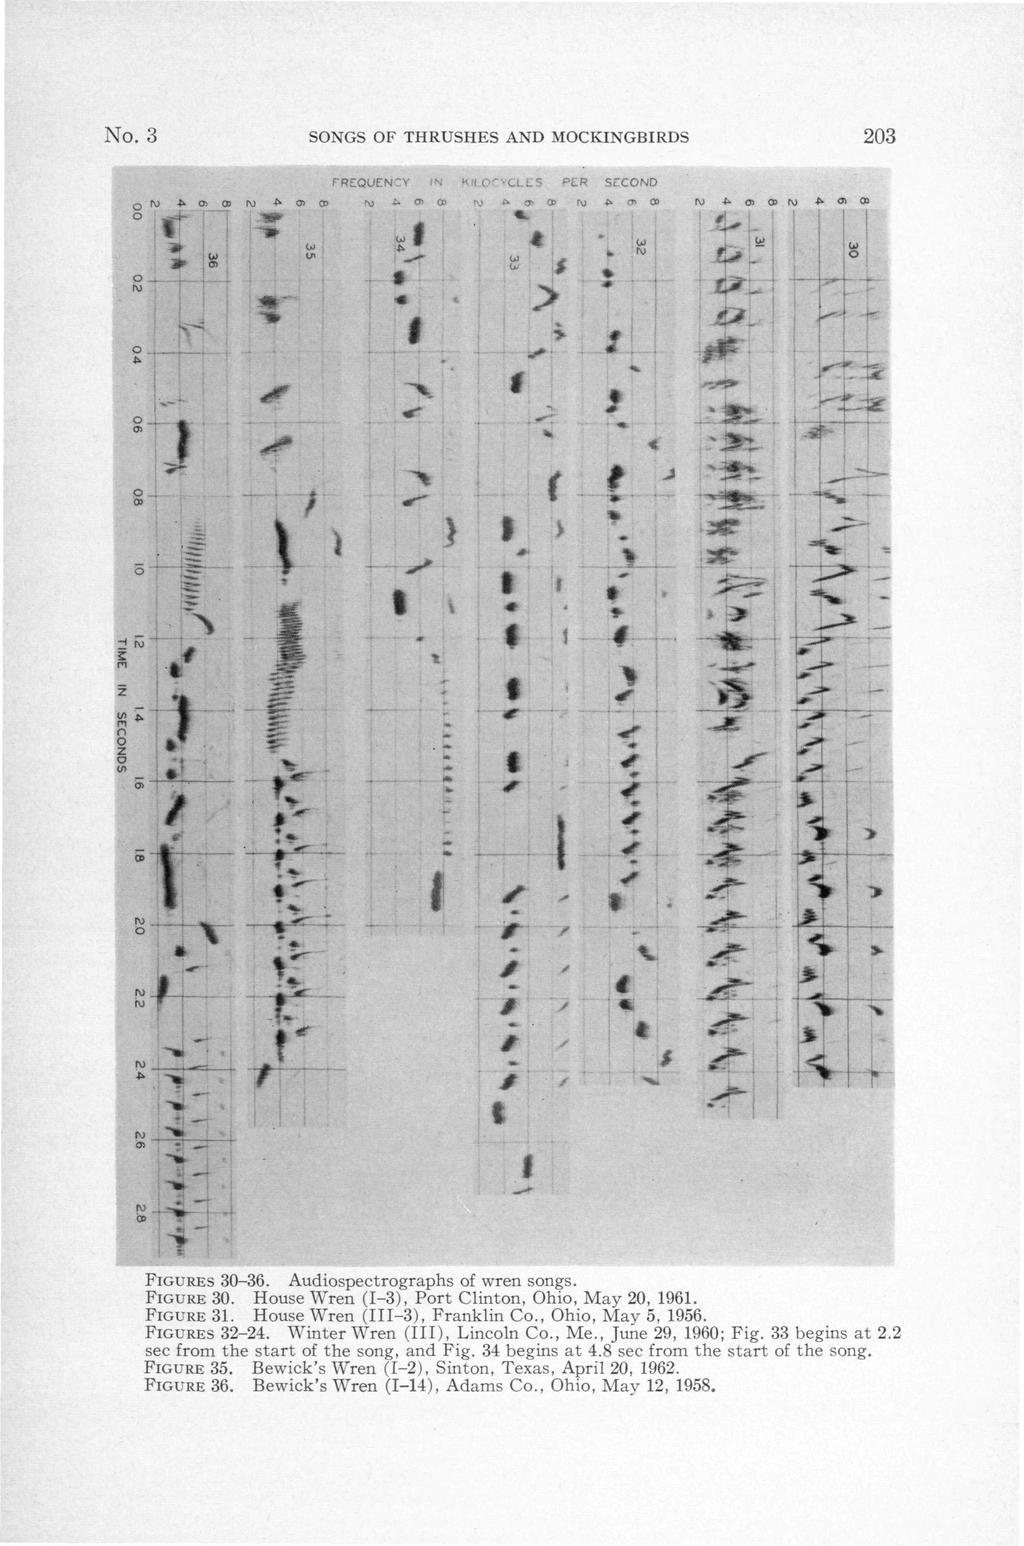 No. 3 SONGS OF THRUSHES AND MOCKINGBIRDS 203 FIGURES 30-36. Audiospectrographs of wren songs. FIGURE 30. House Wren (1-3), Port Clinton, Ohio, May 20, 1961. FIGURE 31. House Wren (III-3), Franklin Co.